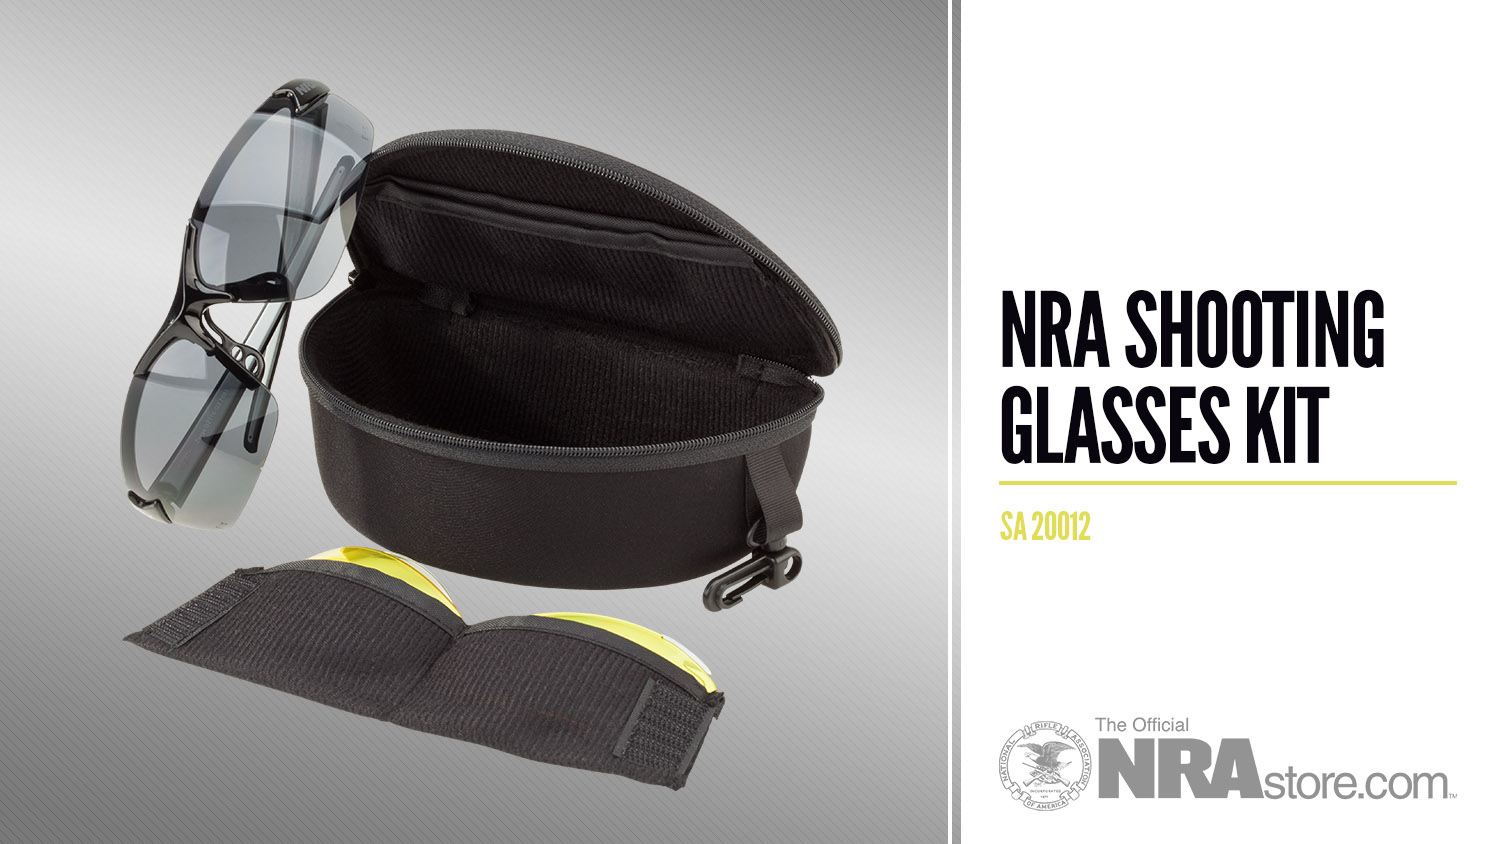 NRAstore Product Highlight: NRA Shooting Glasses Kit